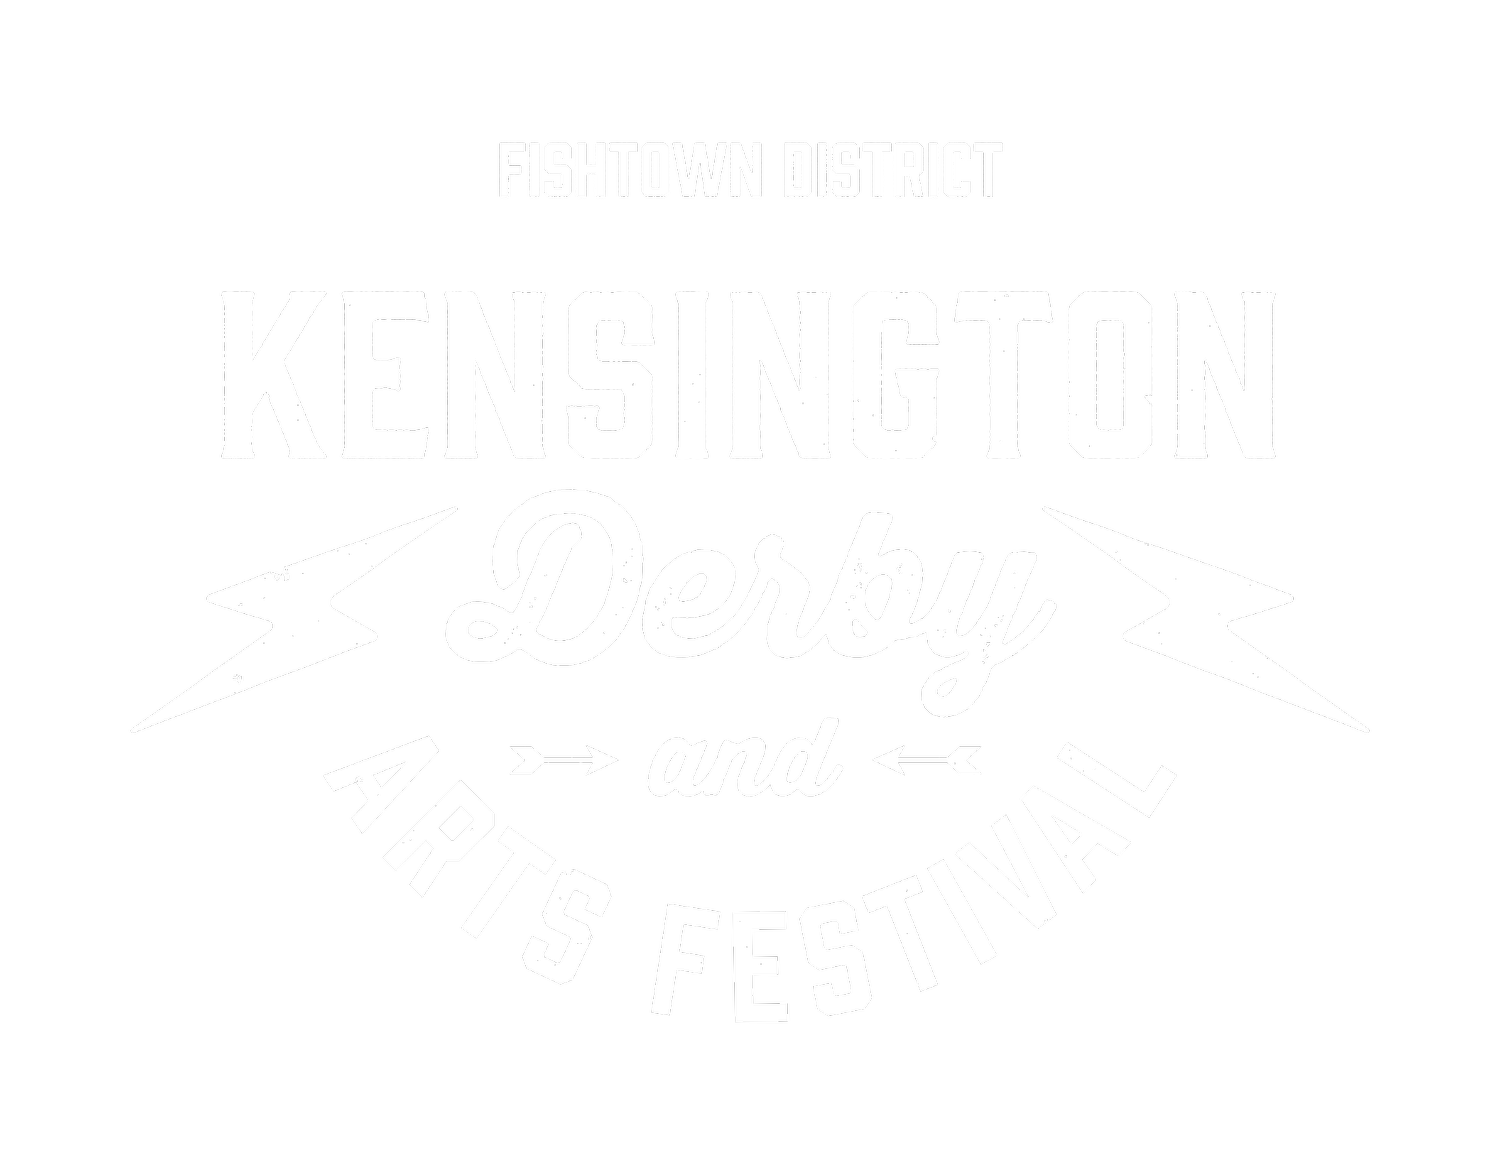 Kensington Derby & Arts Festival